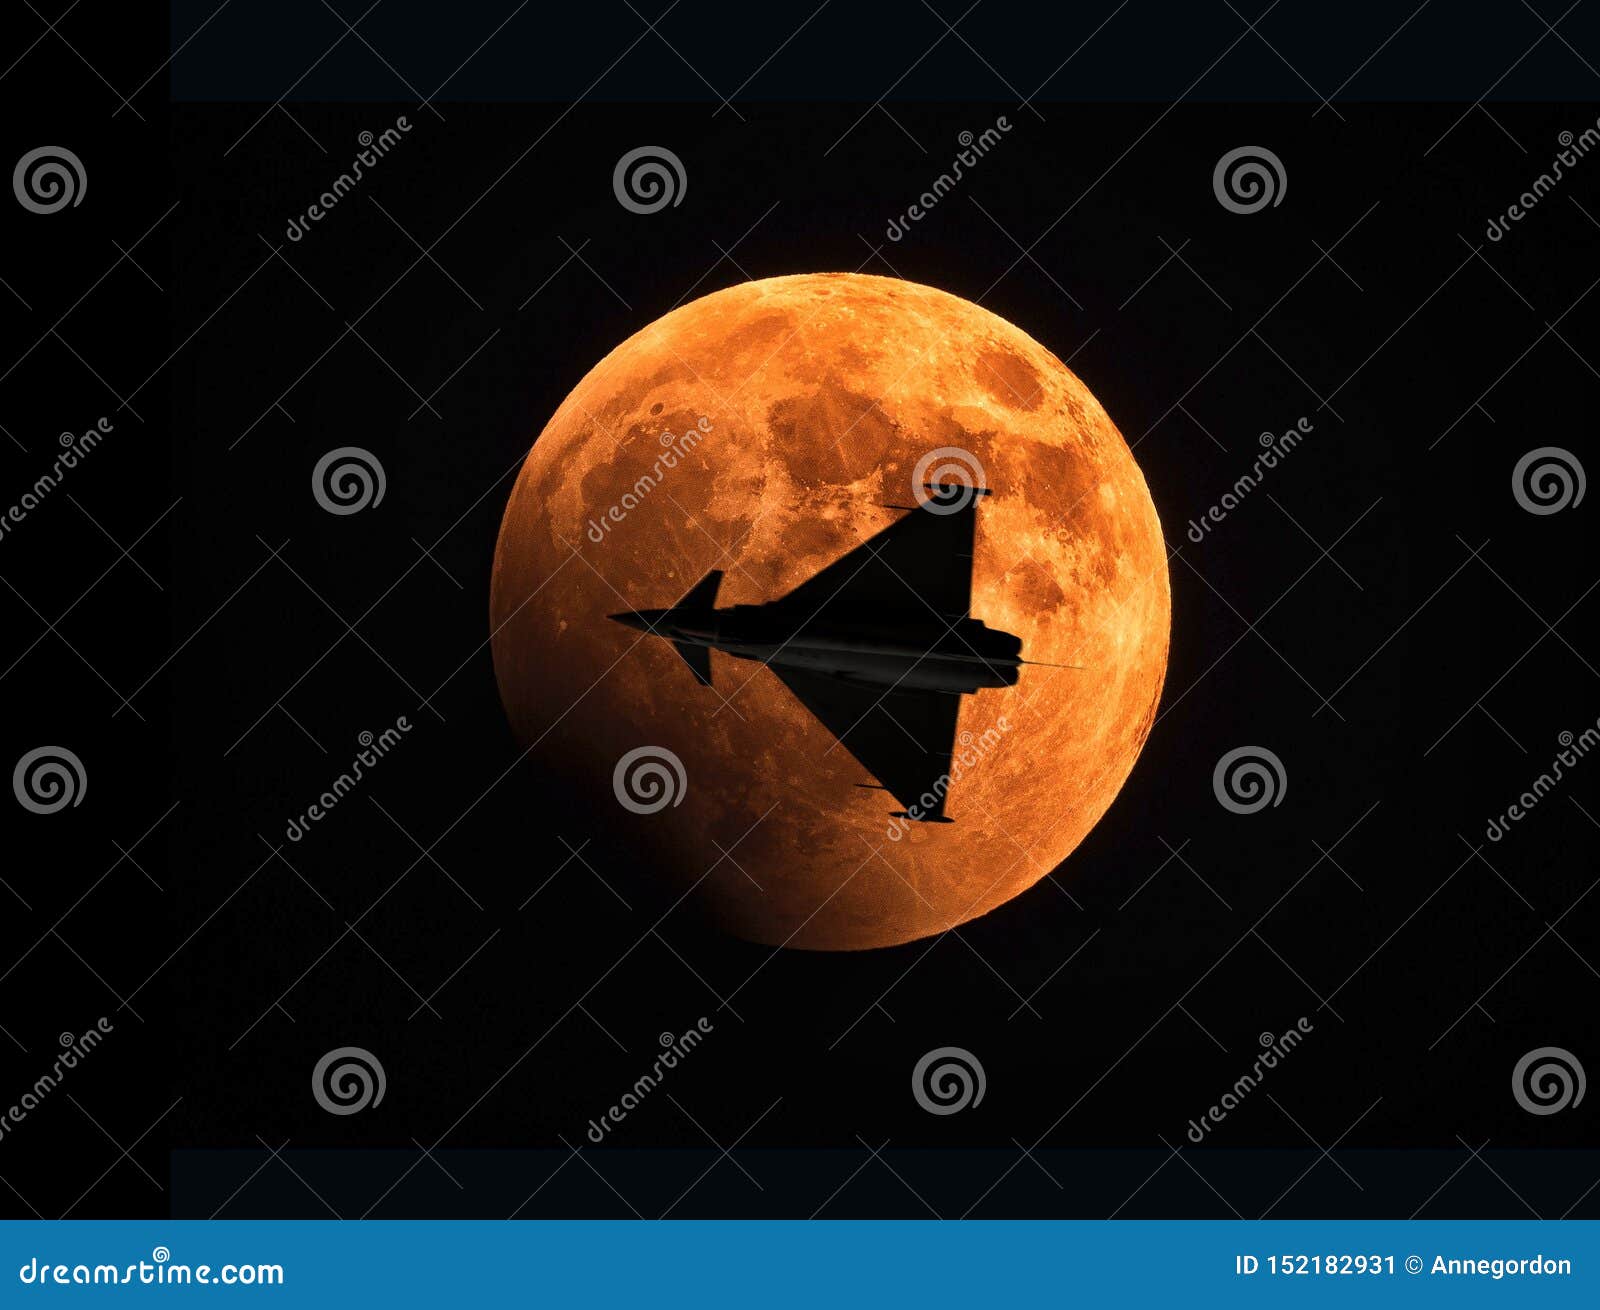 eurofighter warplane and full moon